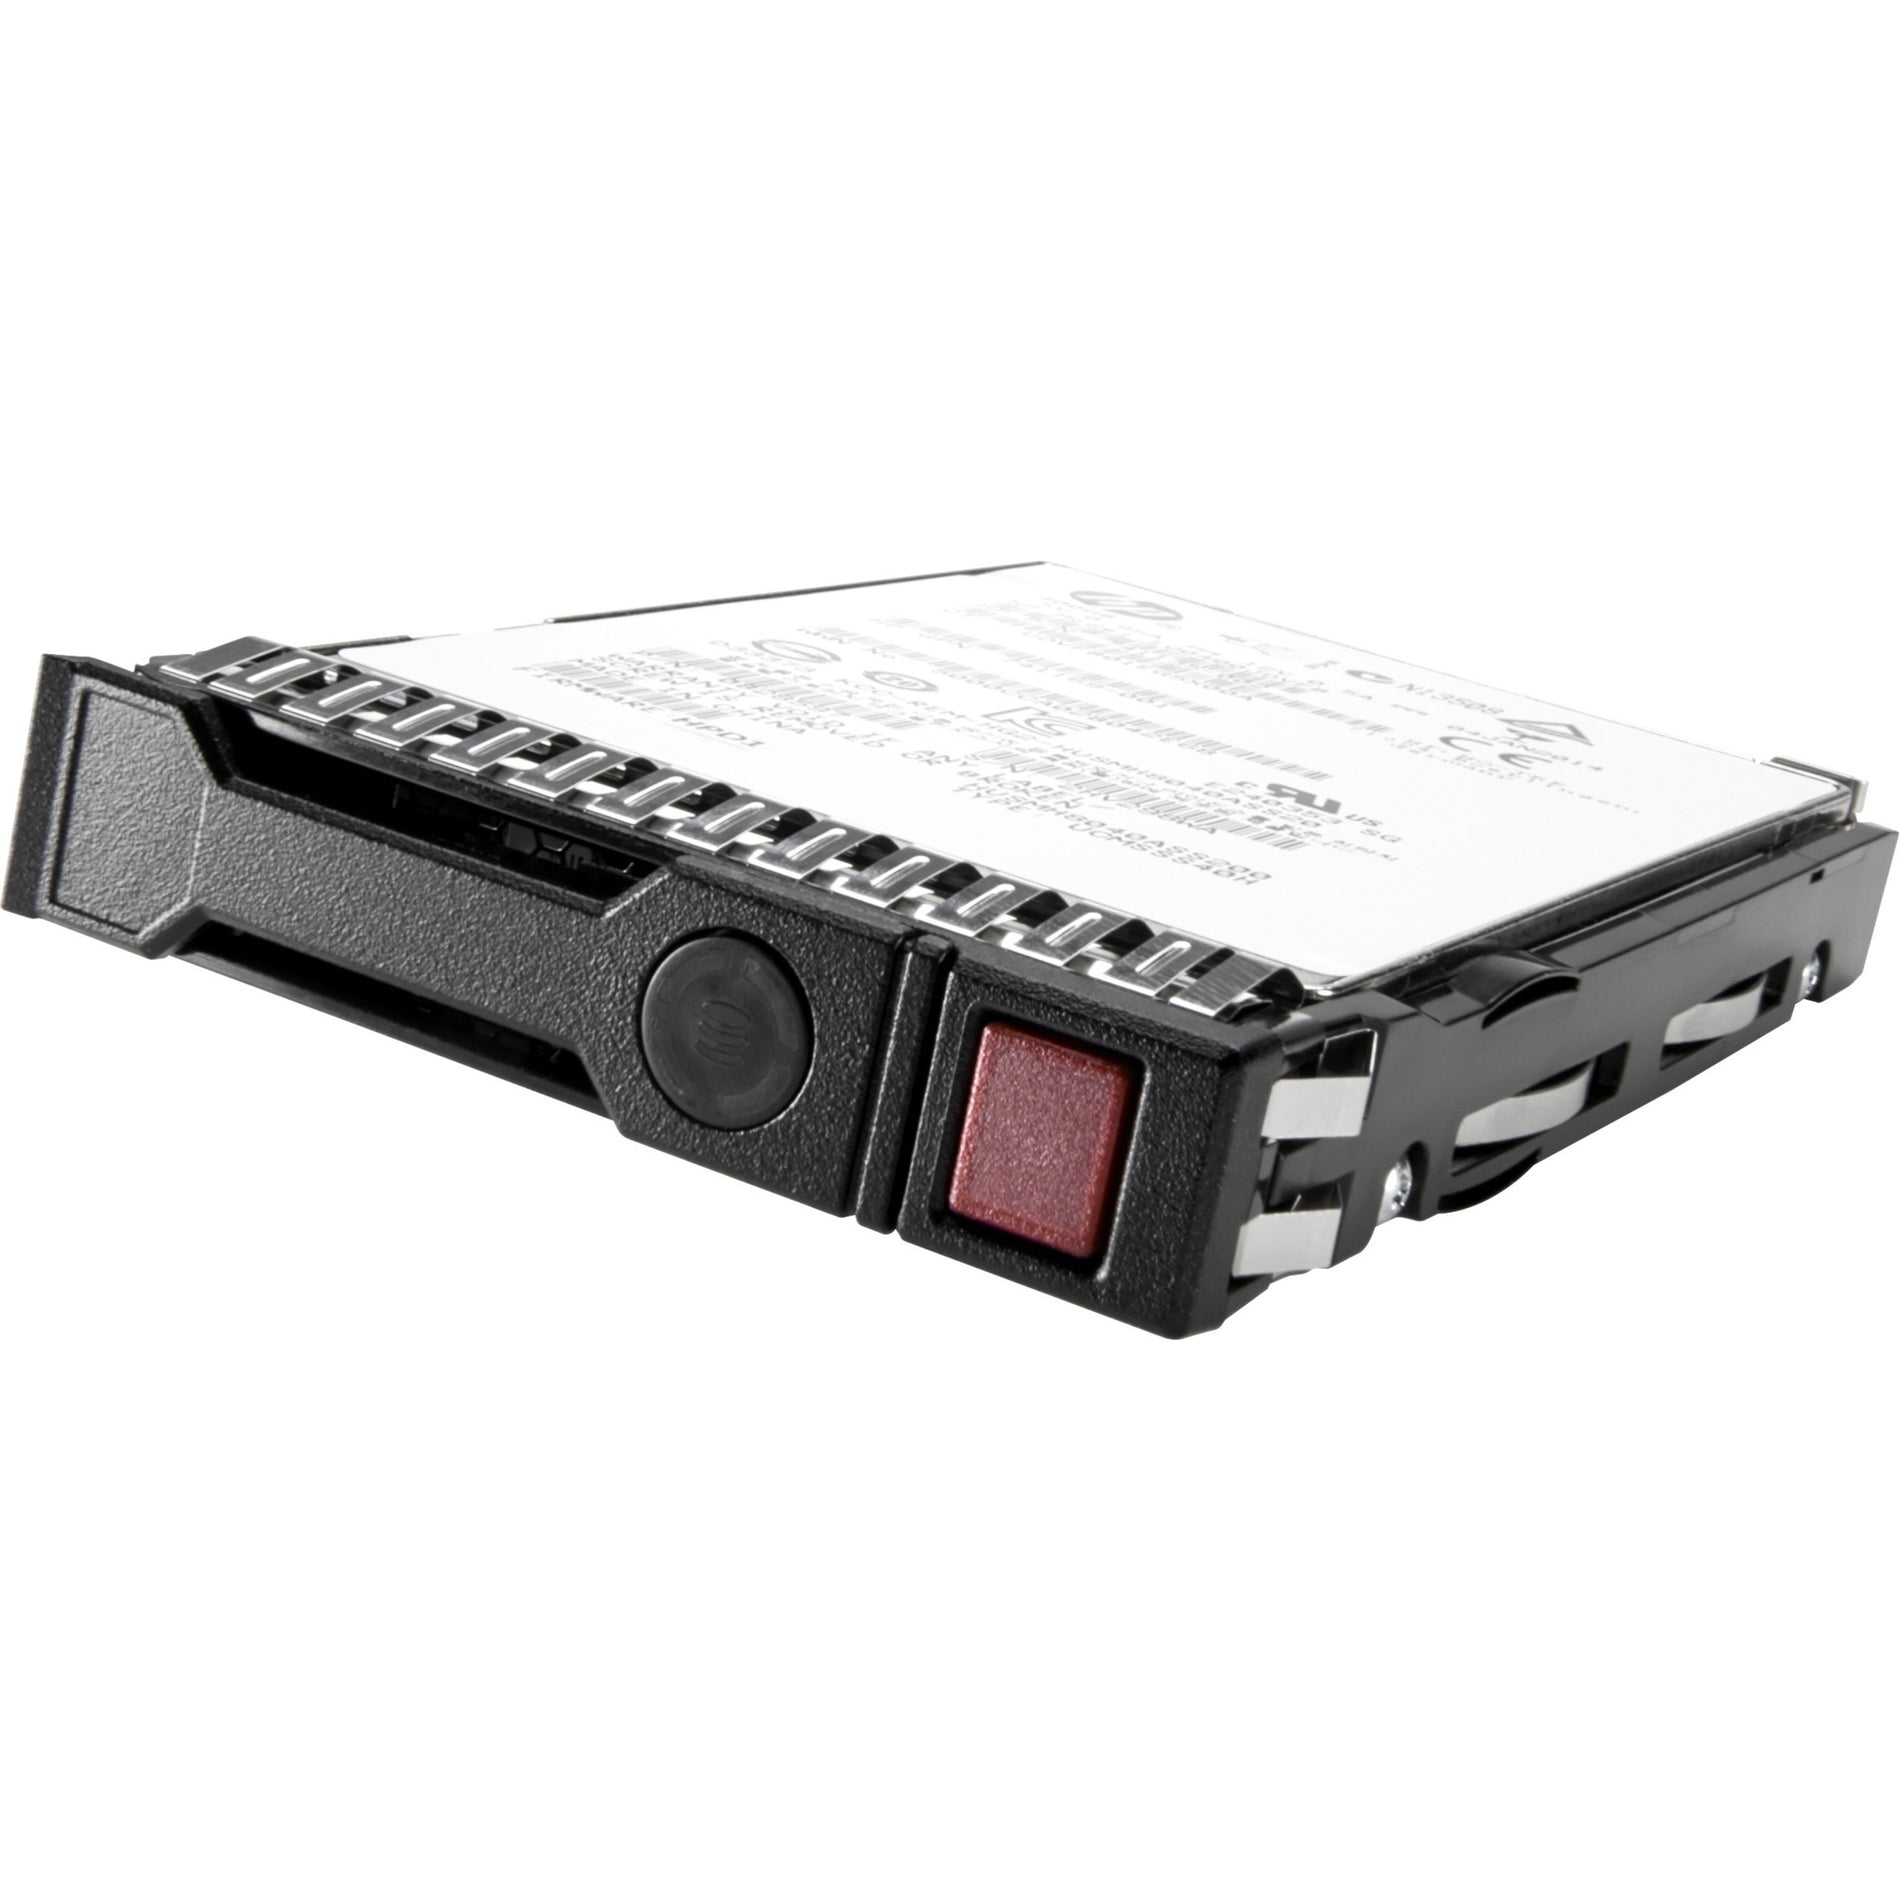 HPE 872477-B21 Hard Drive - 600 GB SAS Internal, 12Gb/s SAS, 10000 rpm